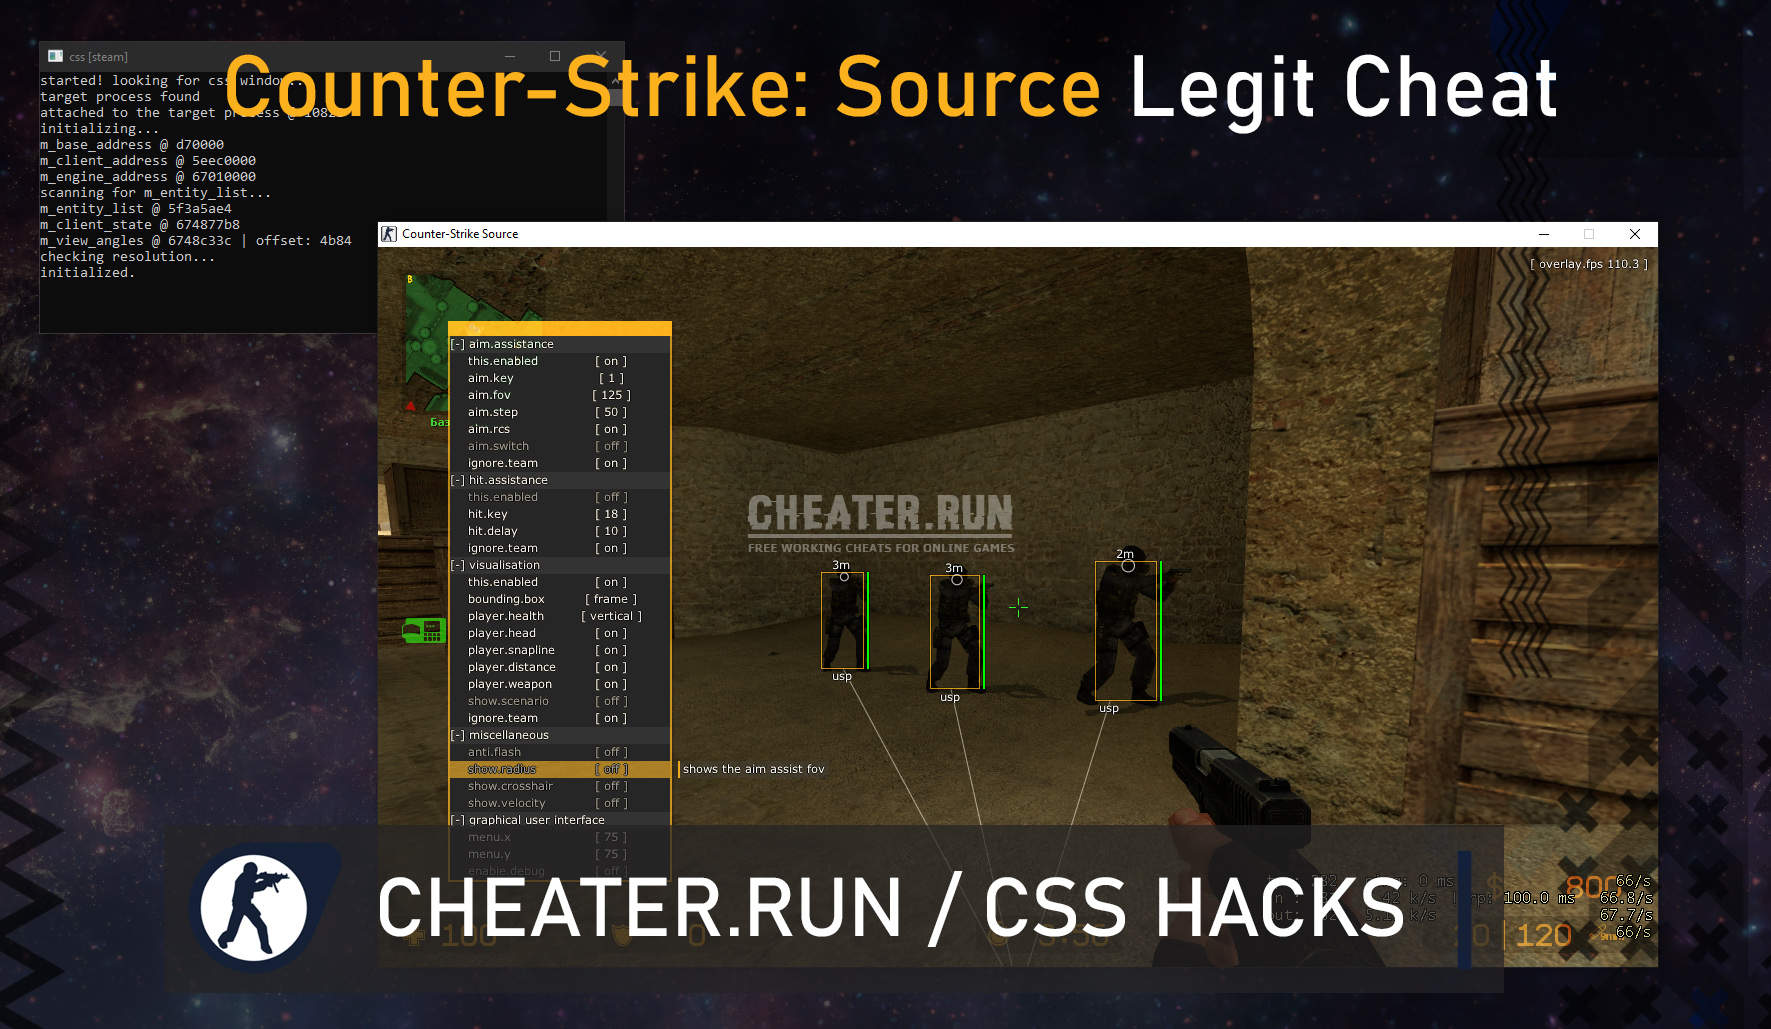 Counter-Strike:Source legit cheat download